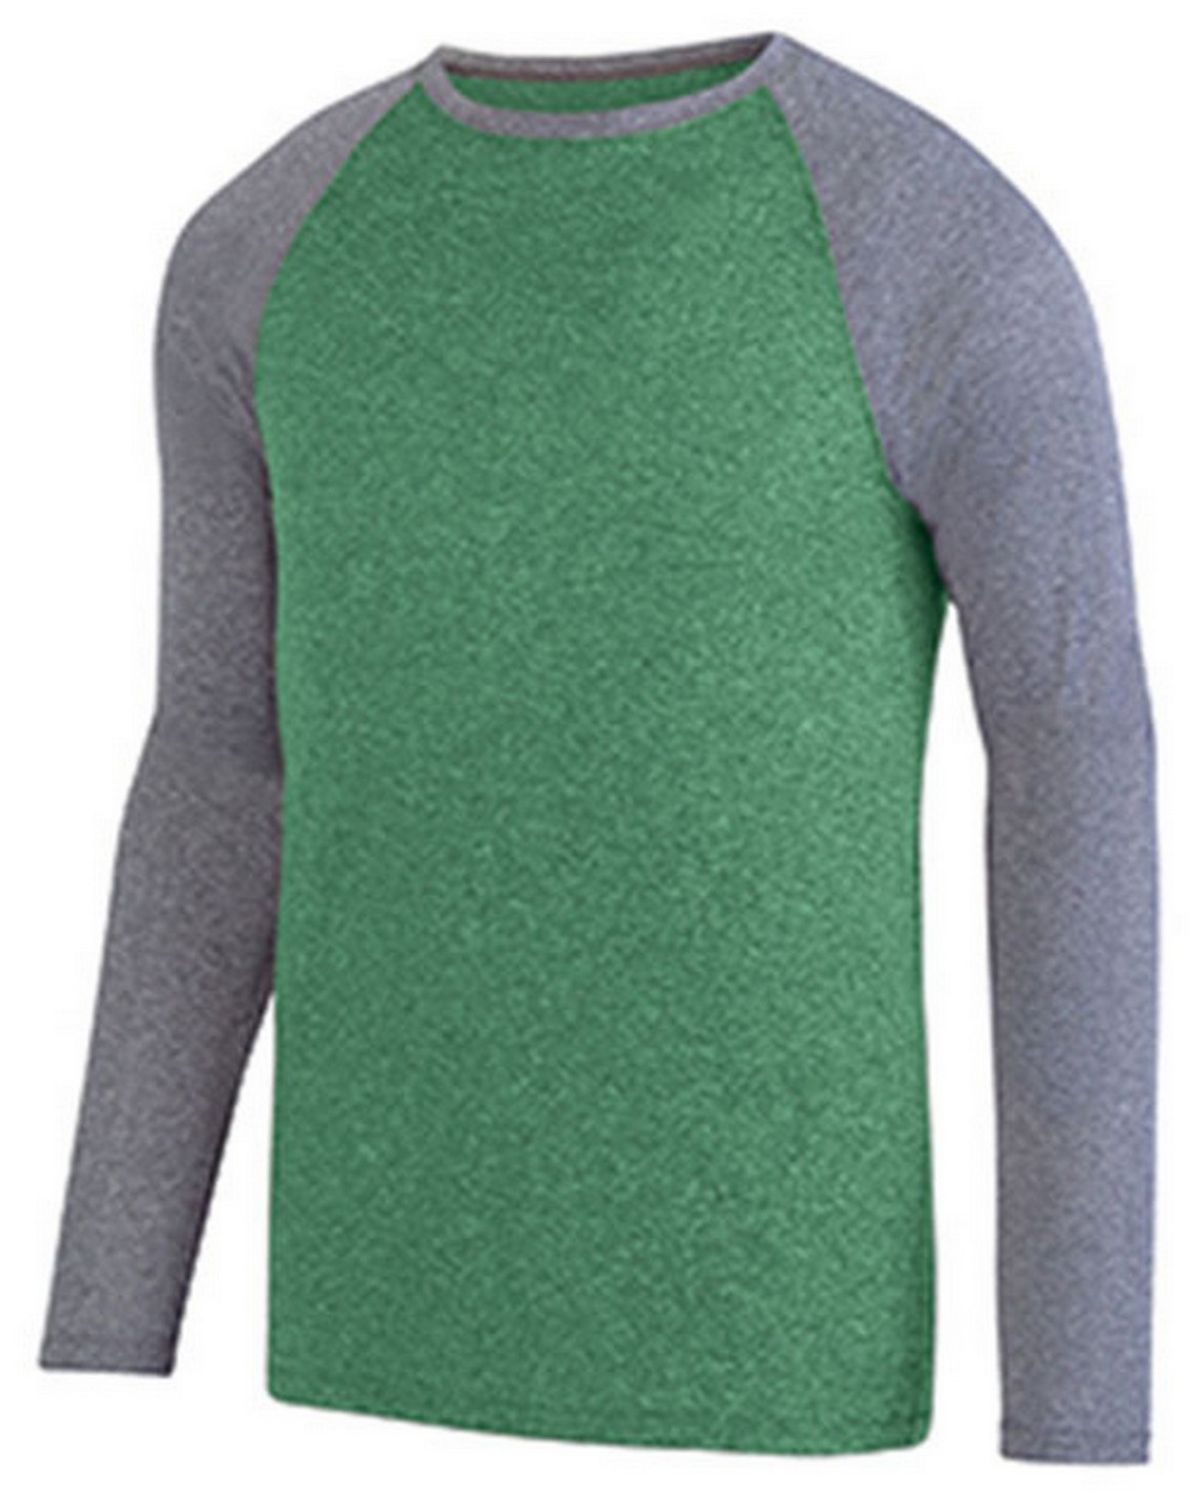 Augusta Sportswear 2815 Unisex Kinergy Two Color Long Sleeve Raglan T-Shirt